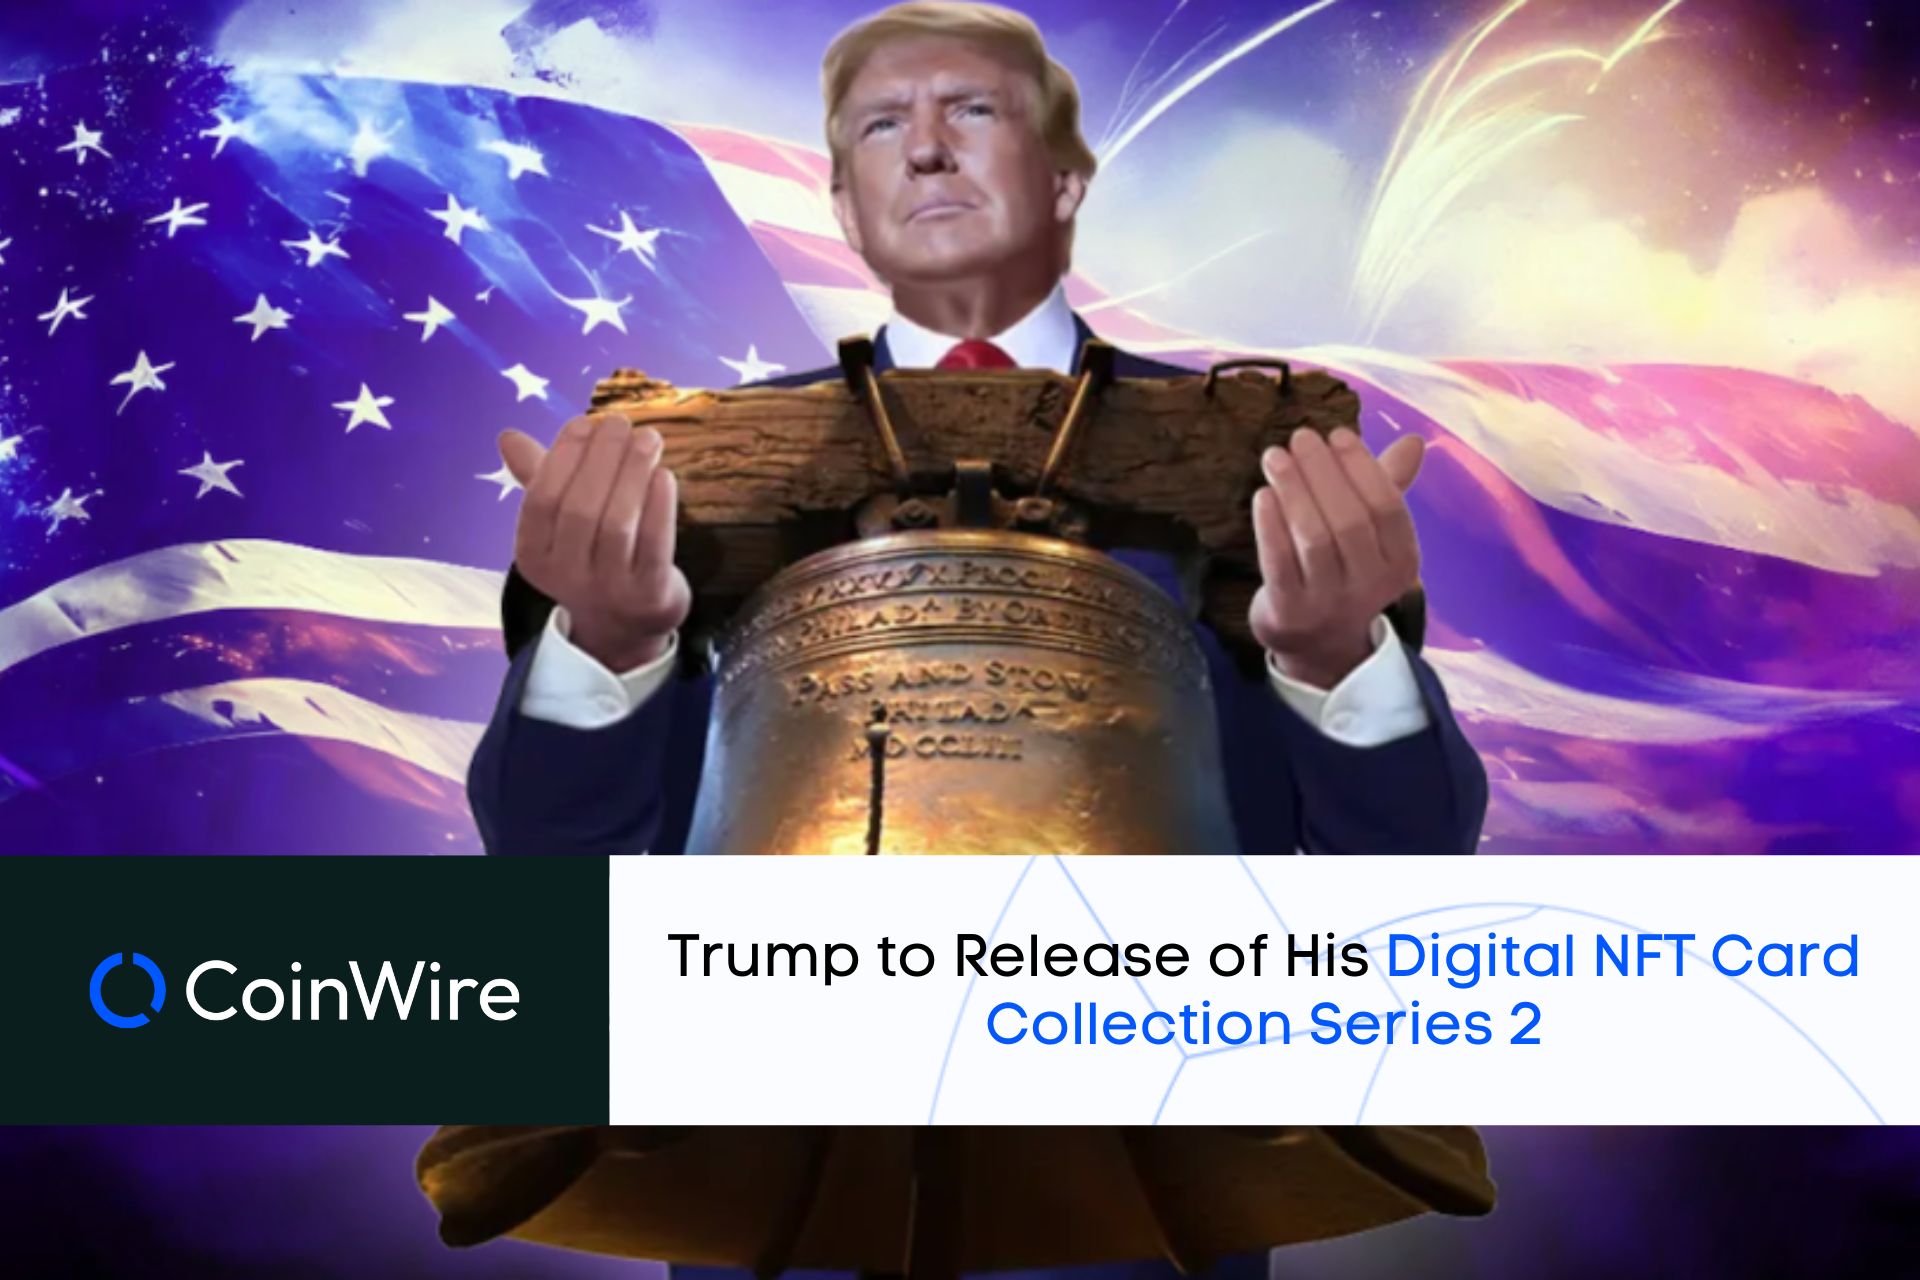 Trump'S Digital Nft Series 2 To Be Released